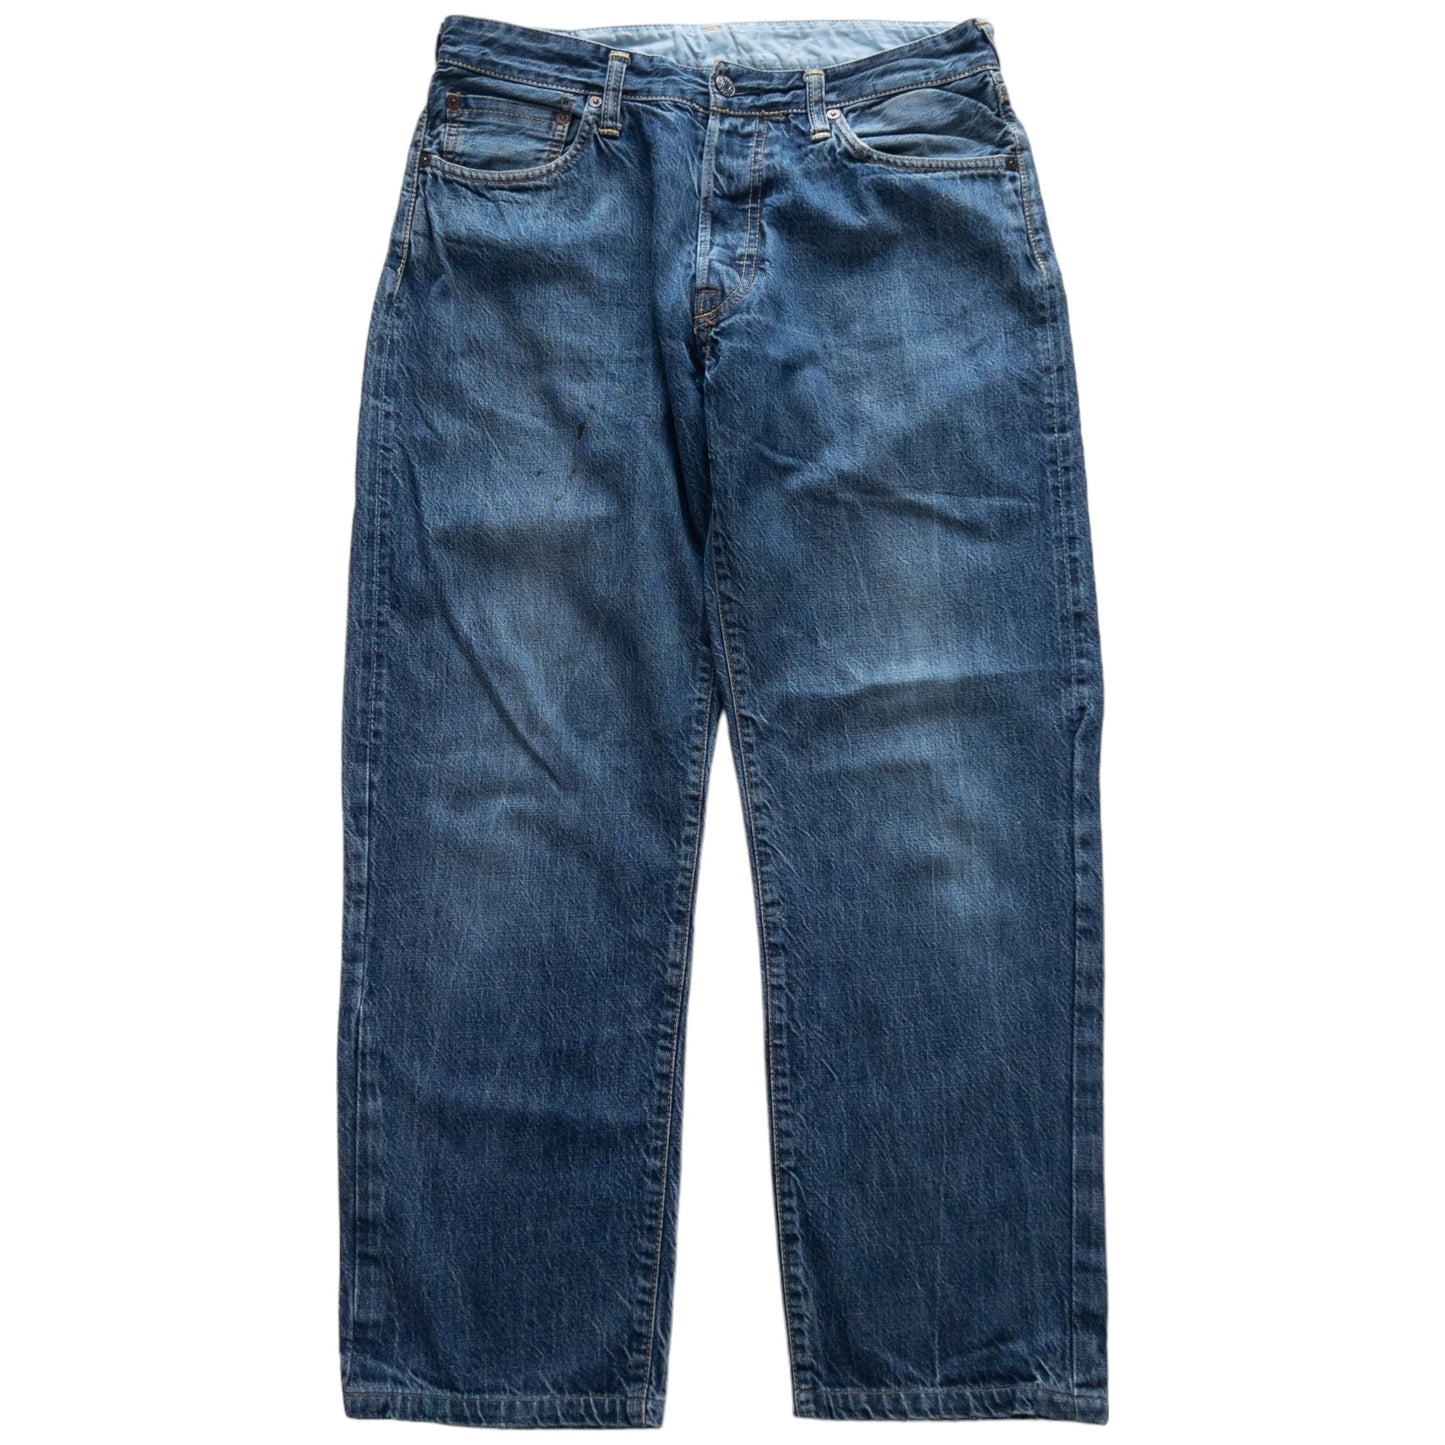 VIntage Evisu Double Gull Japanese Denim Jeans Size W32